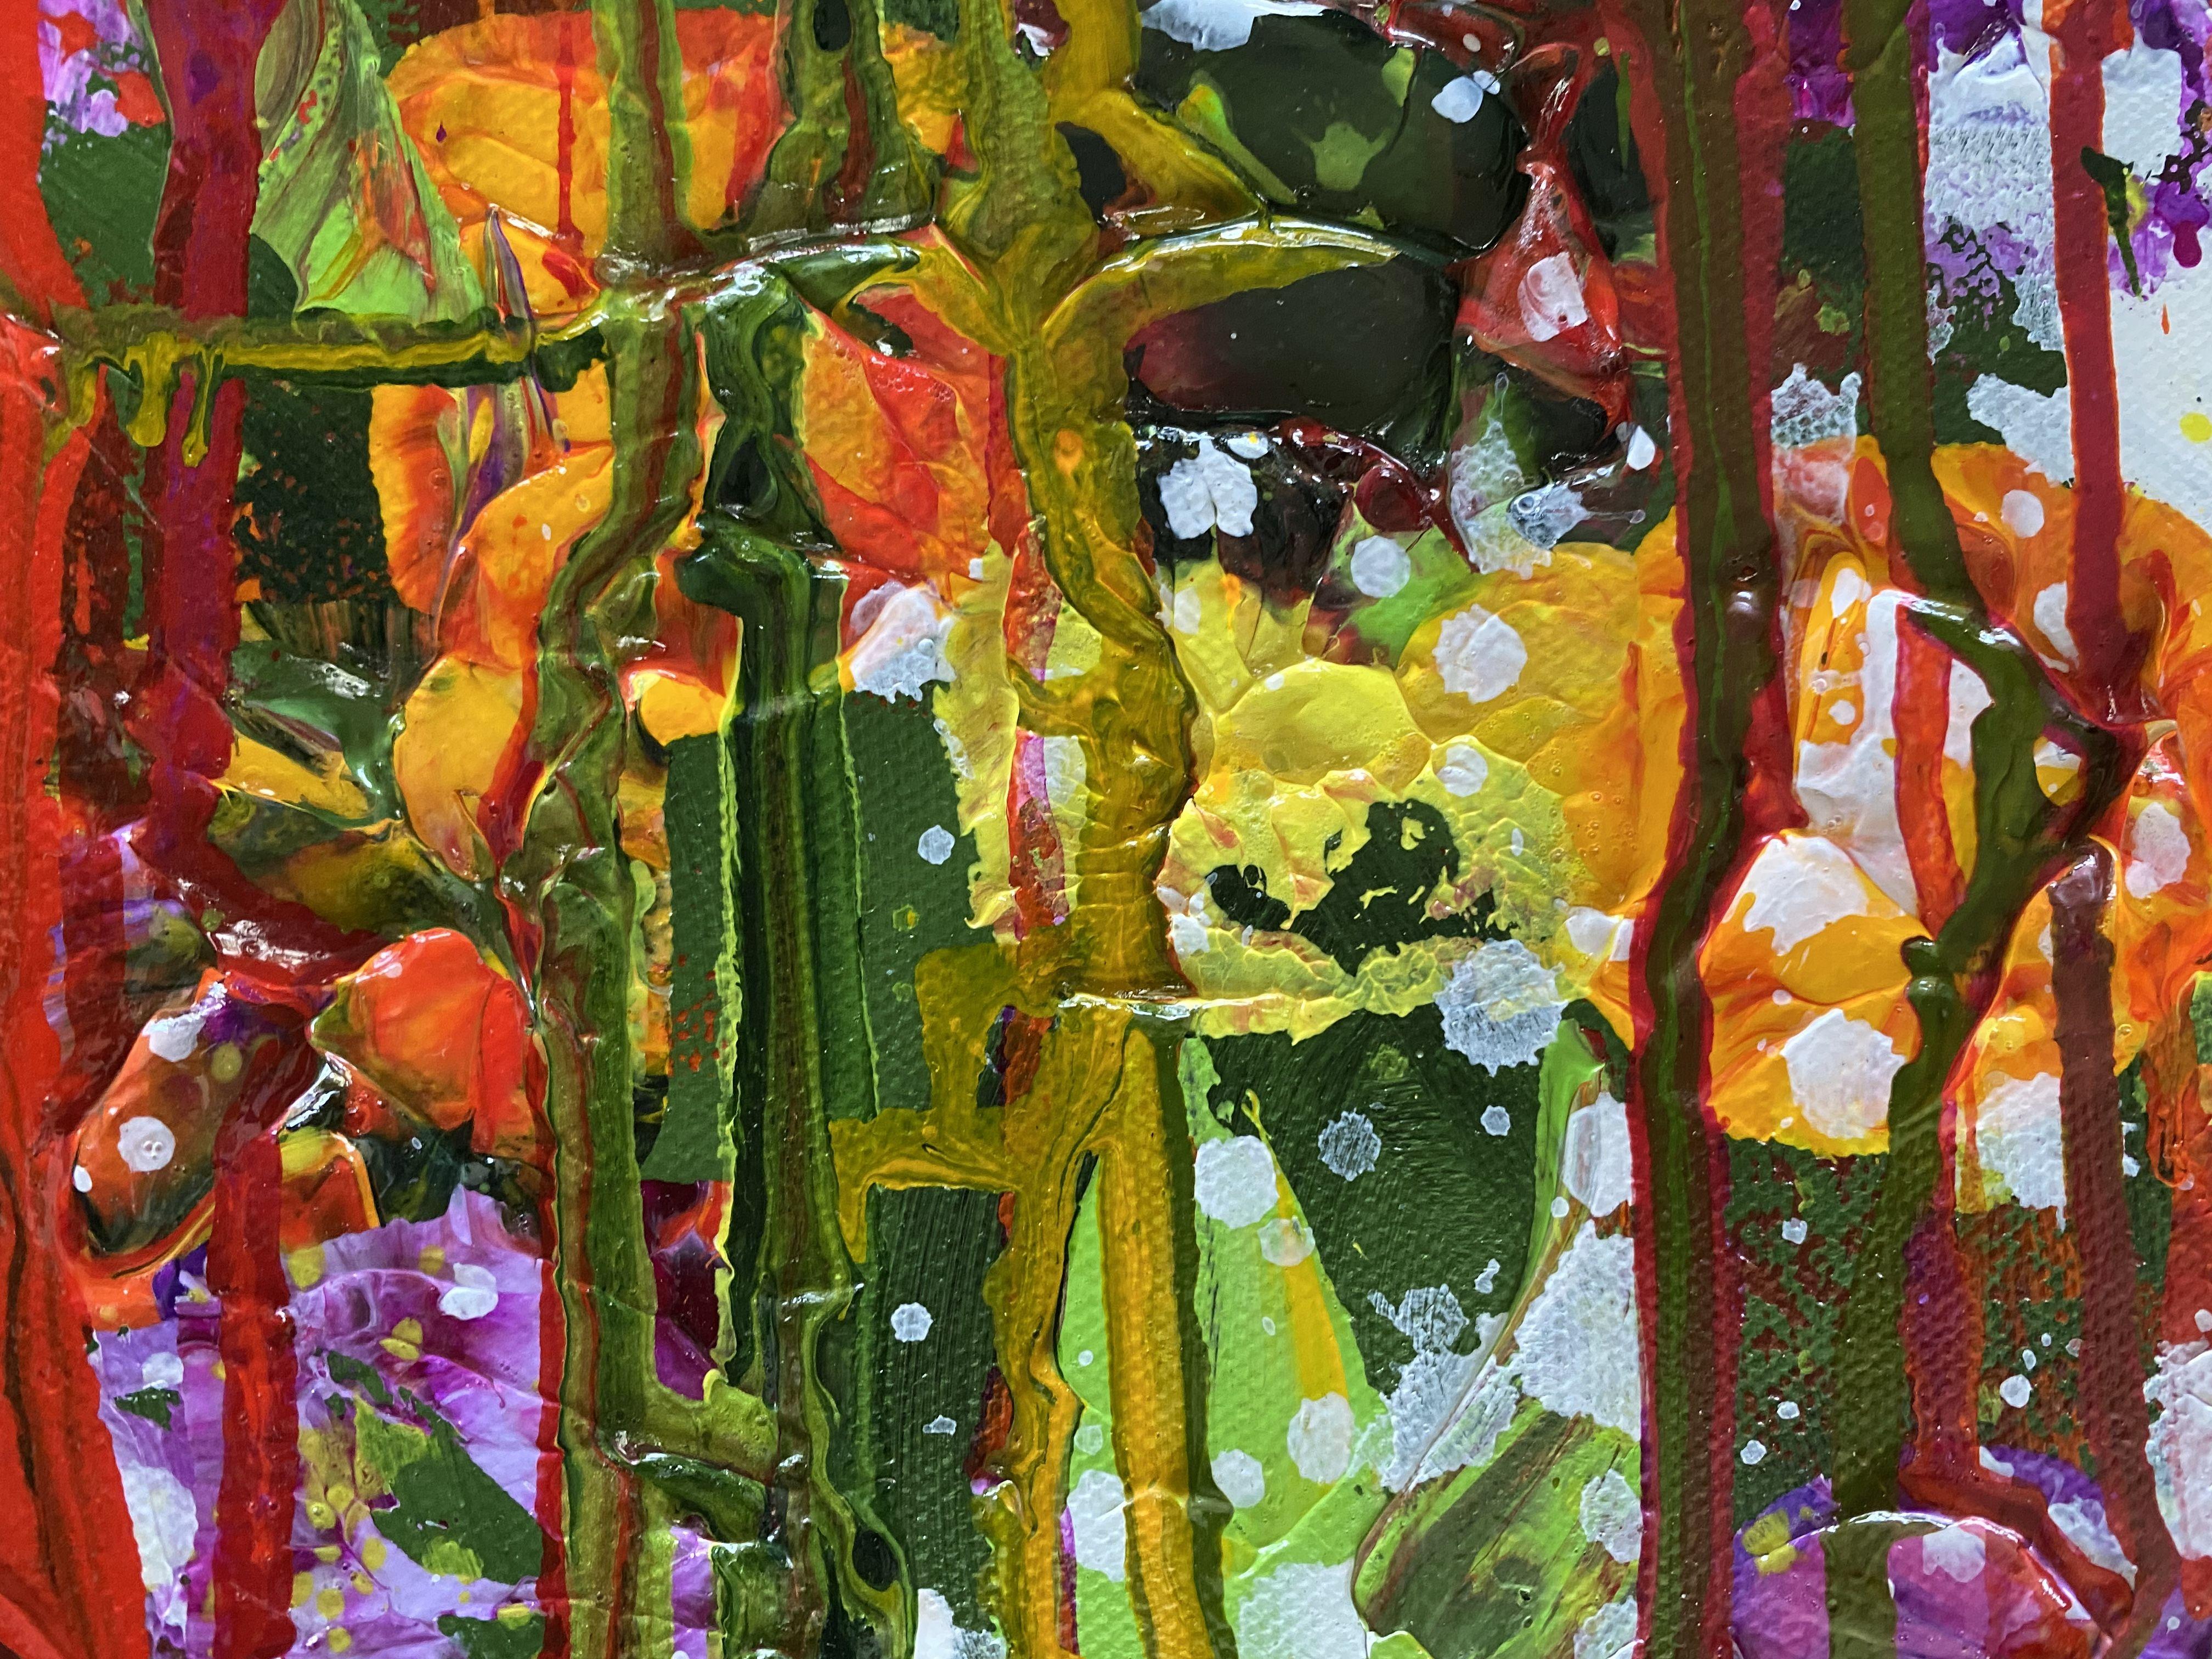 Paris Garden #7, Mixed Media on Canvas - Abstract Expressionist Mixed Media Art by Lianna Klassen